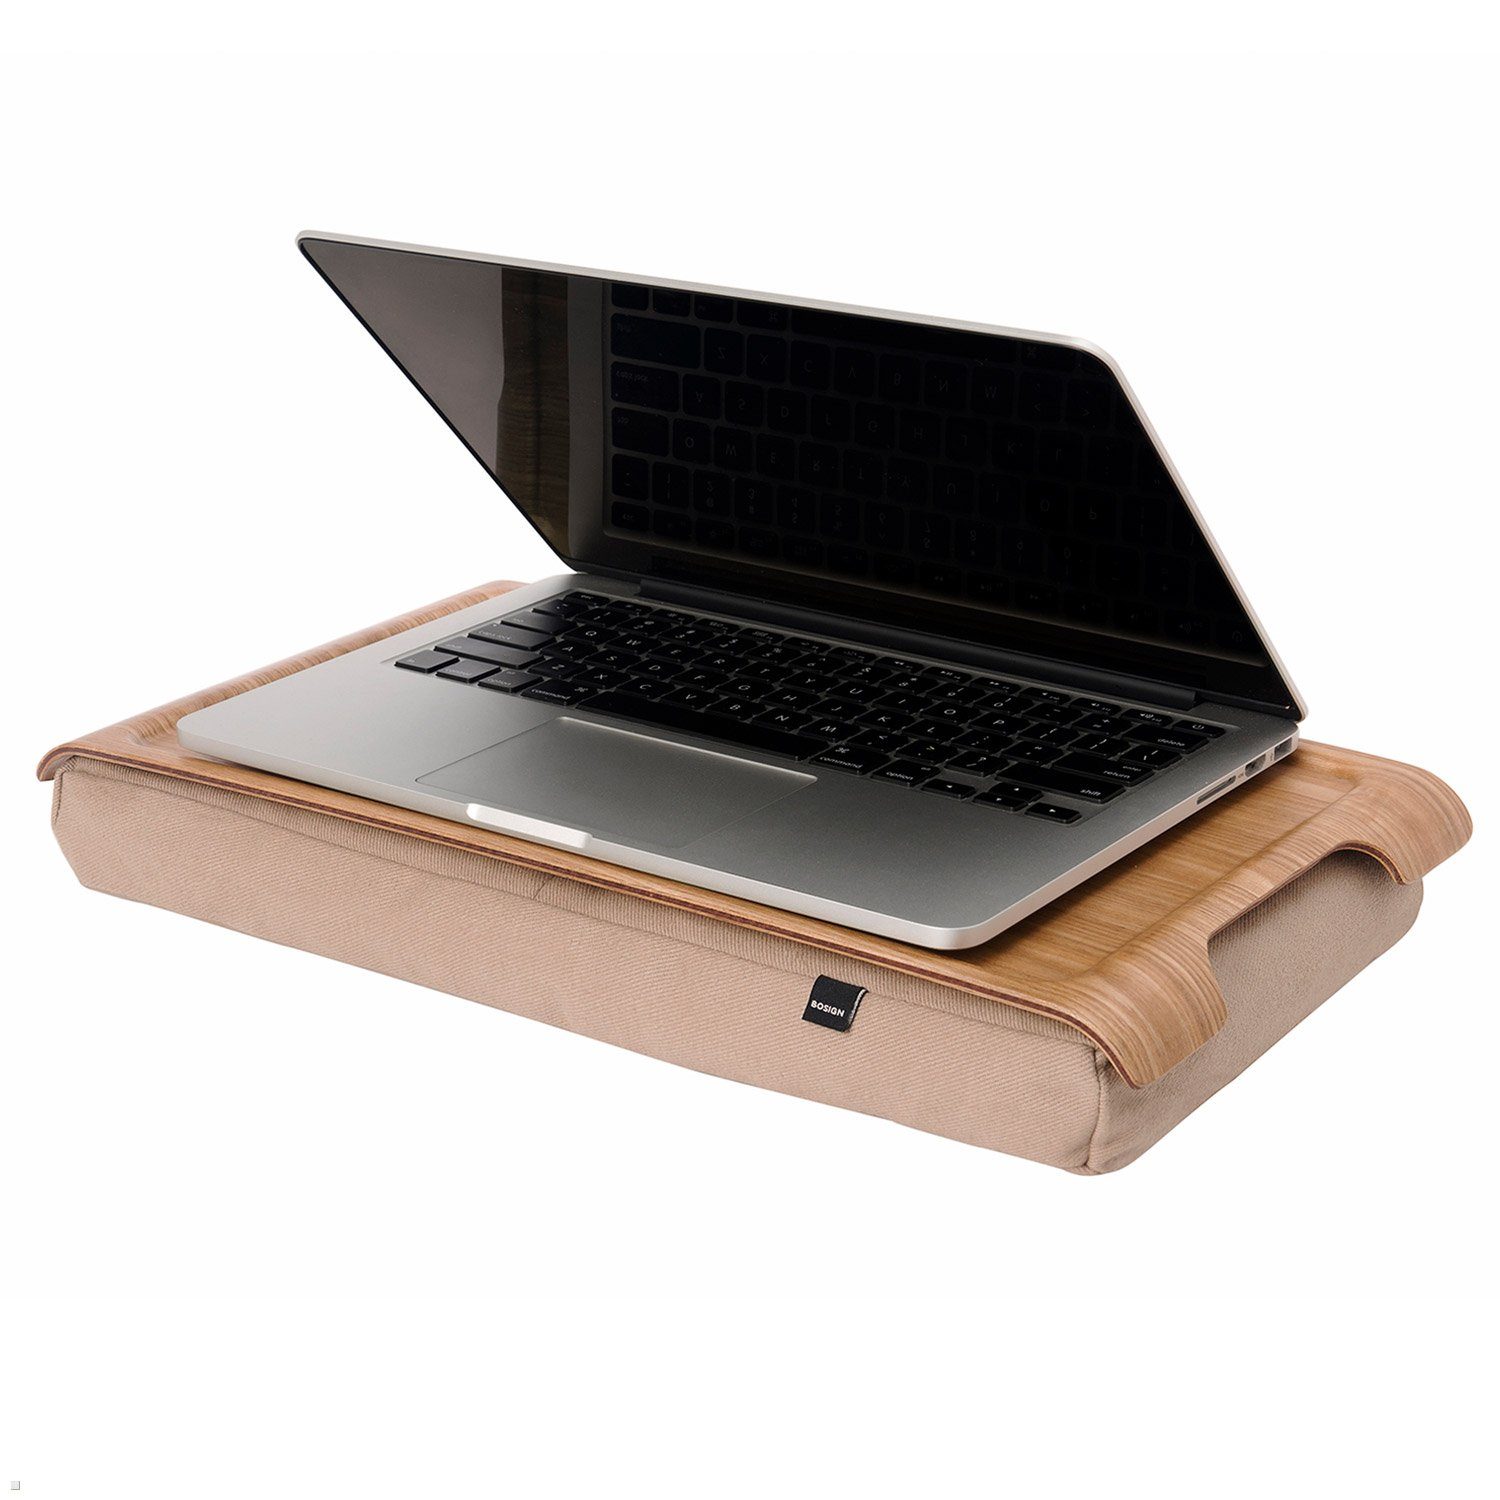 Bosign Laptop Tablett Mini Laptray, Weidenholz, Baumwolle natur